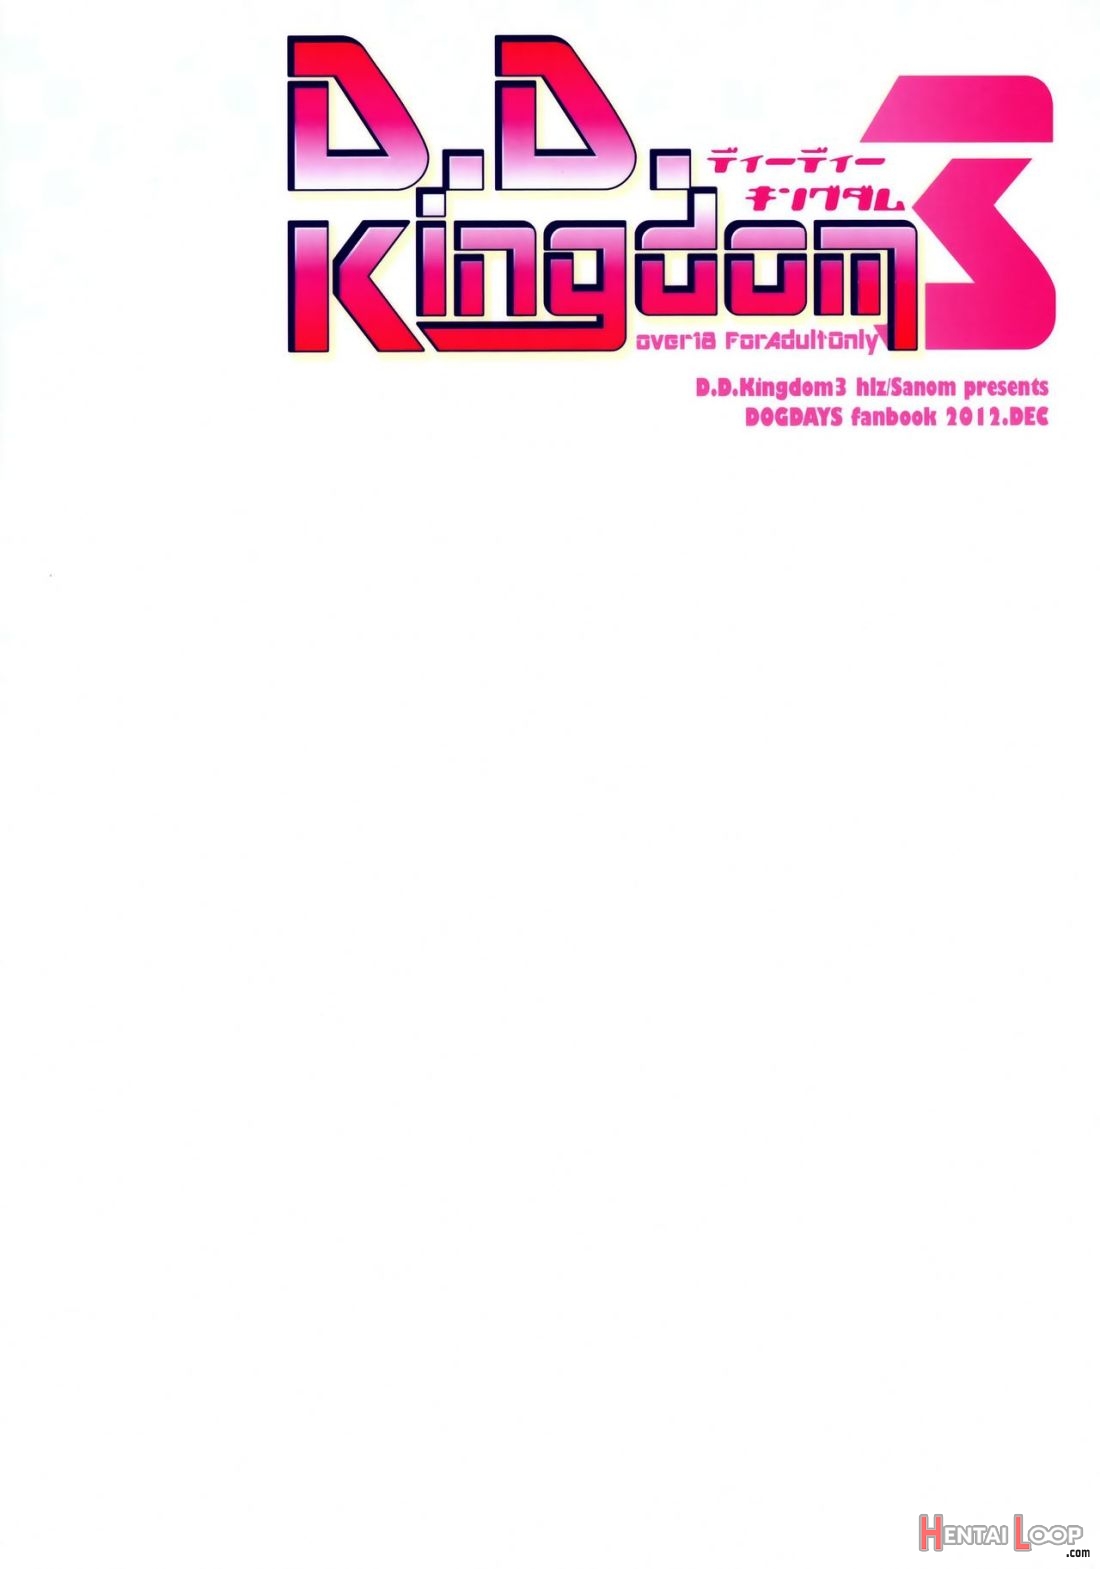 D.d. Kingdom 3 page 2